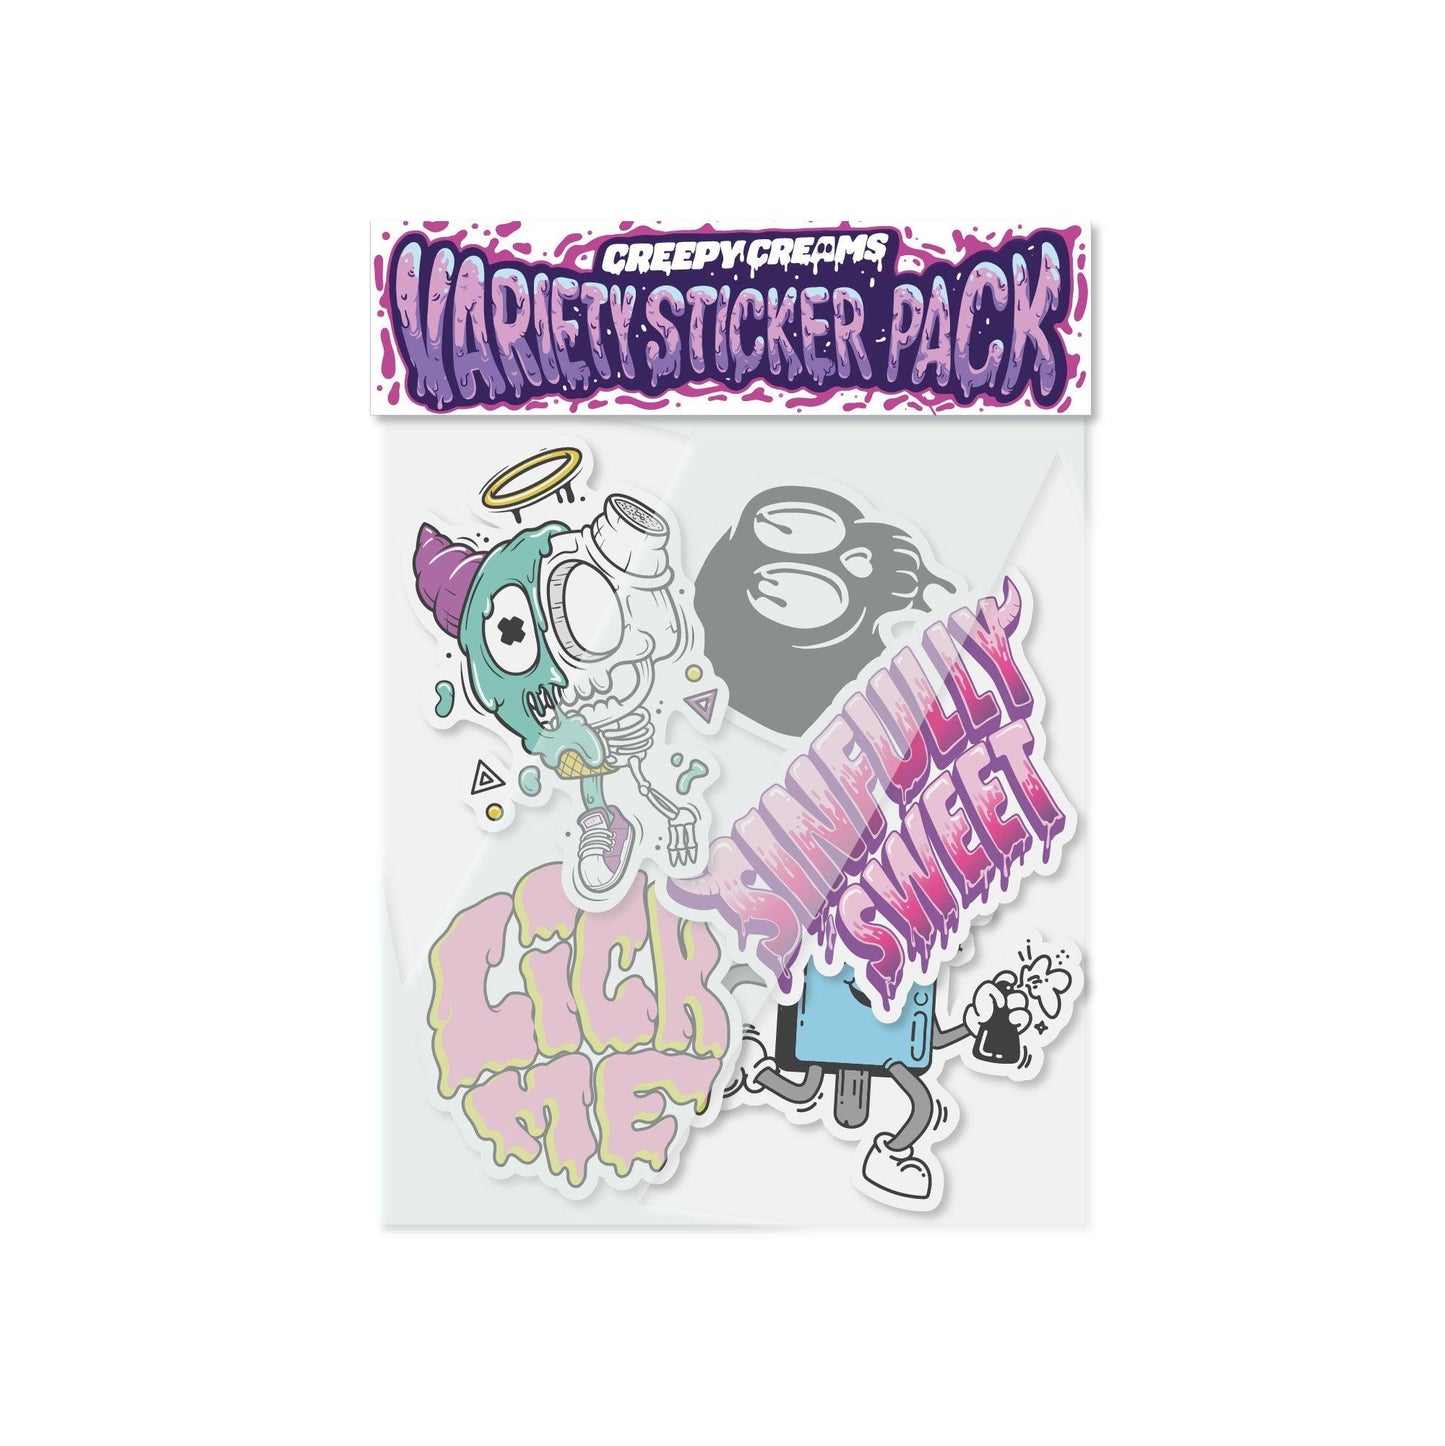 Variety Sticker Pack - Creepy Creams Apparel